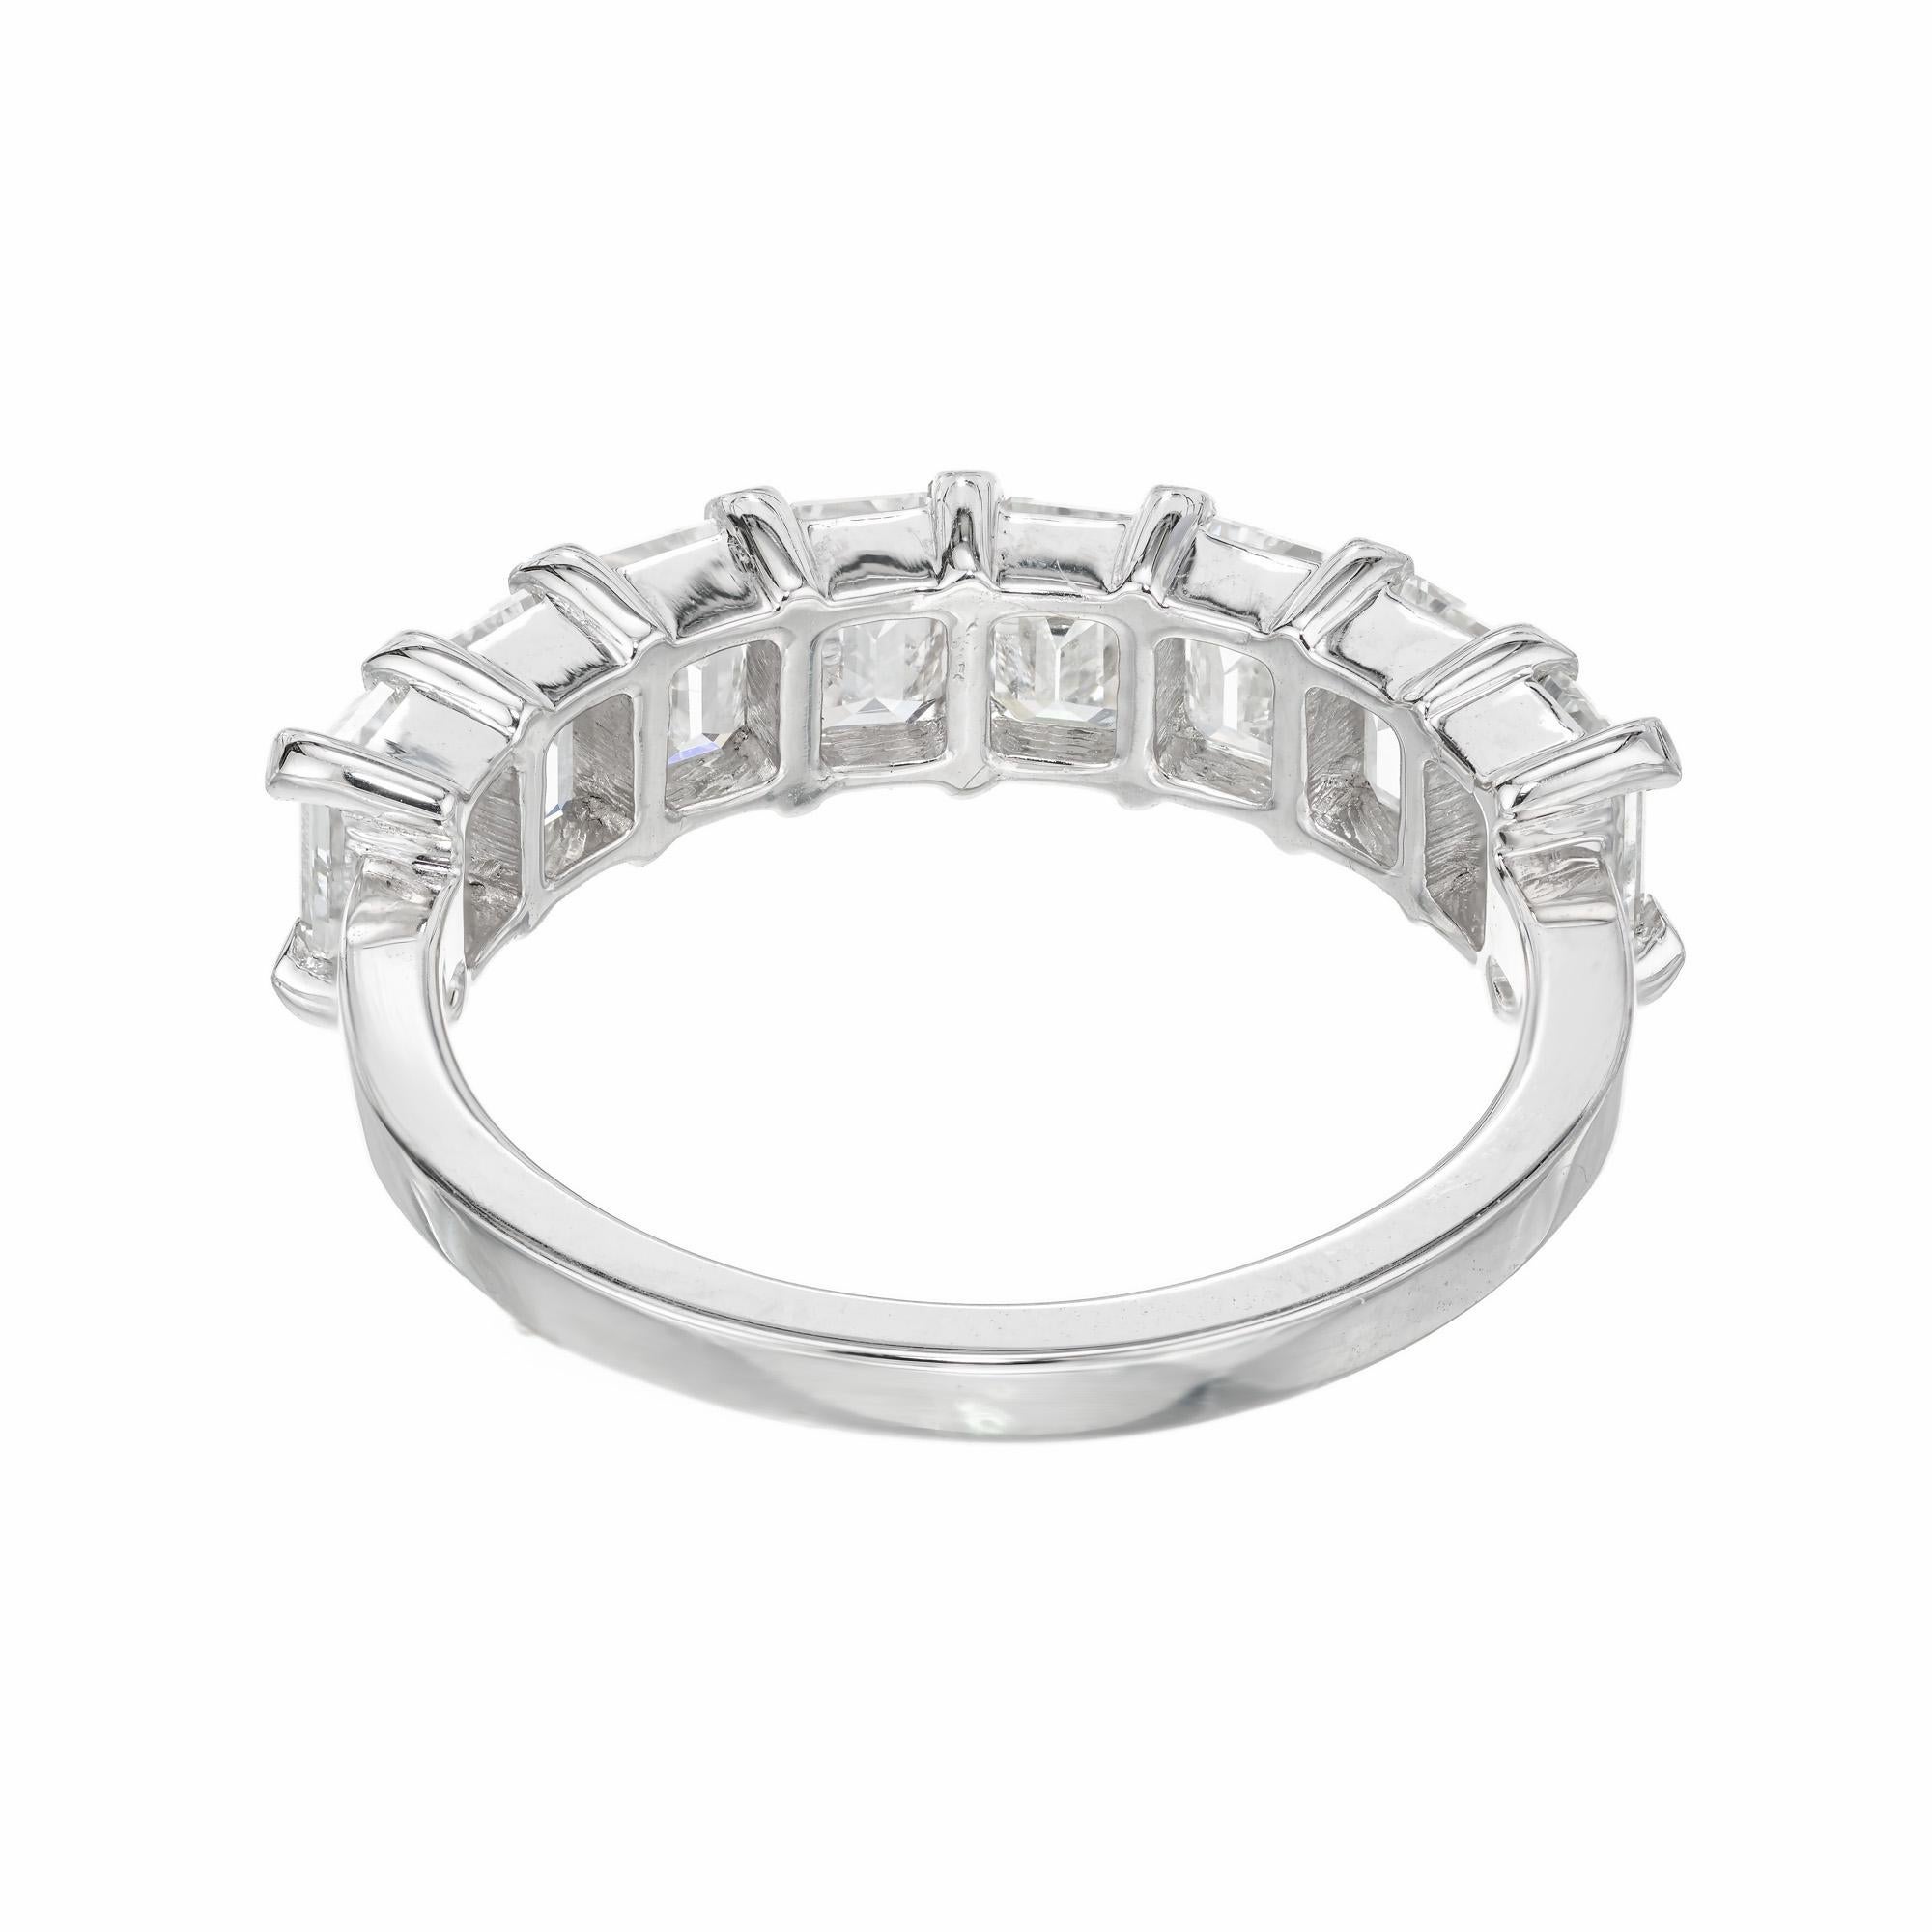 Peter Suchy 2.48 Carat Emerald Cut Diamond Platinum Wedding Band Ring For Sale 1